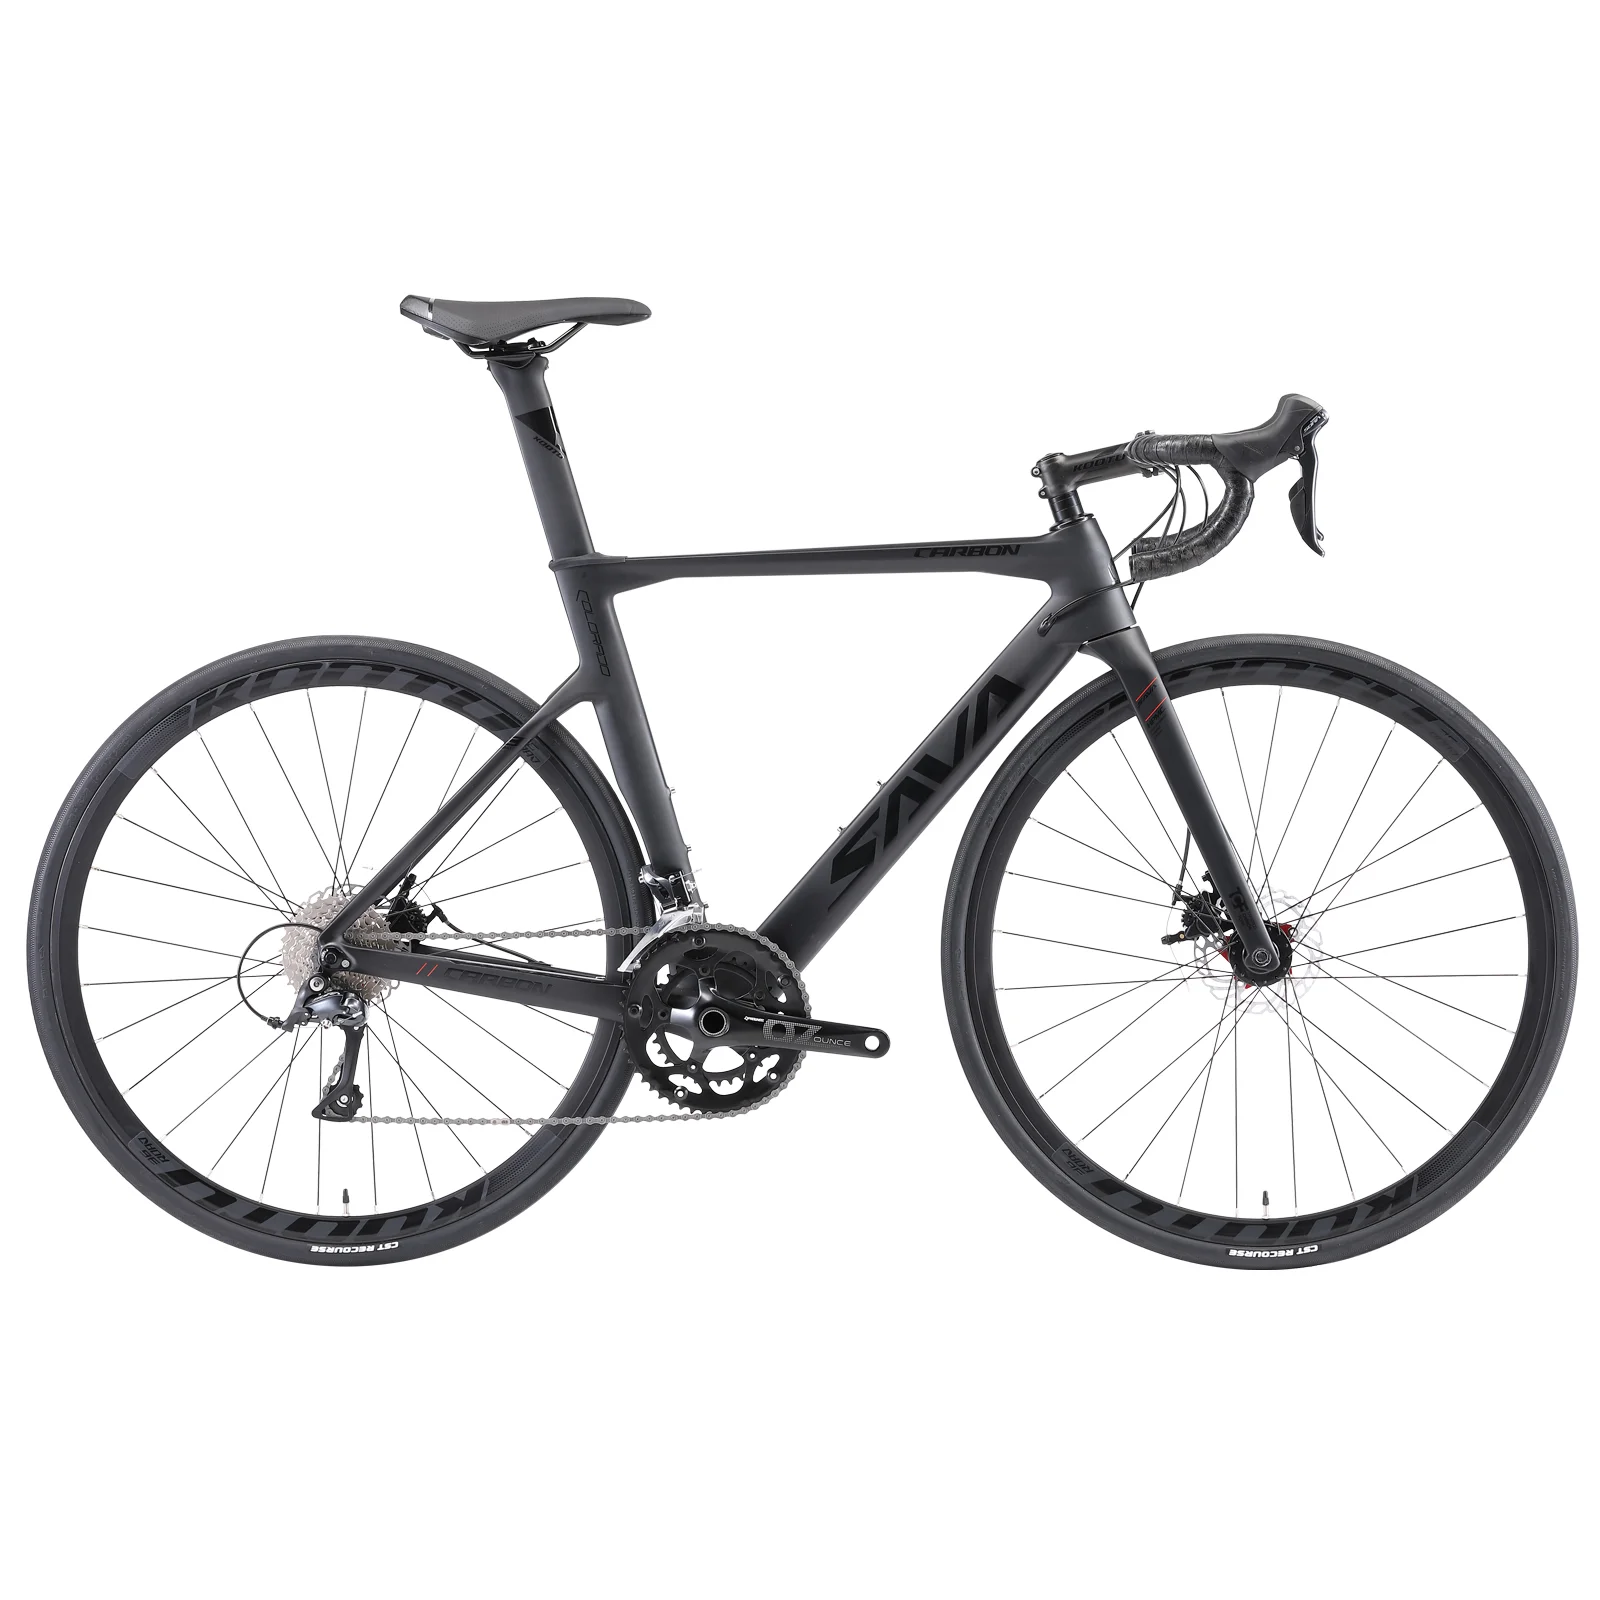 

SAVA professional 700c carbon bicycle frame road bike 18s 47cm 51cm 54cm 56cm disc racing carbon fiber road bike for men, Black / red